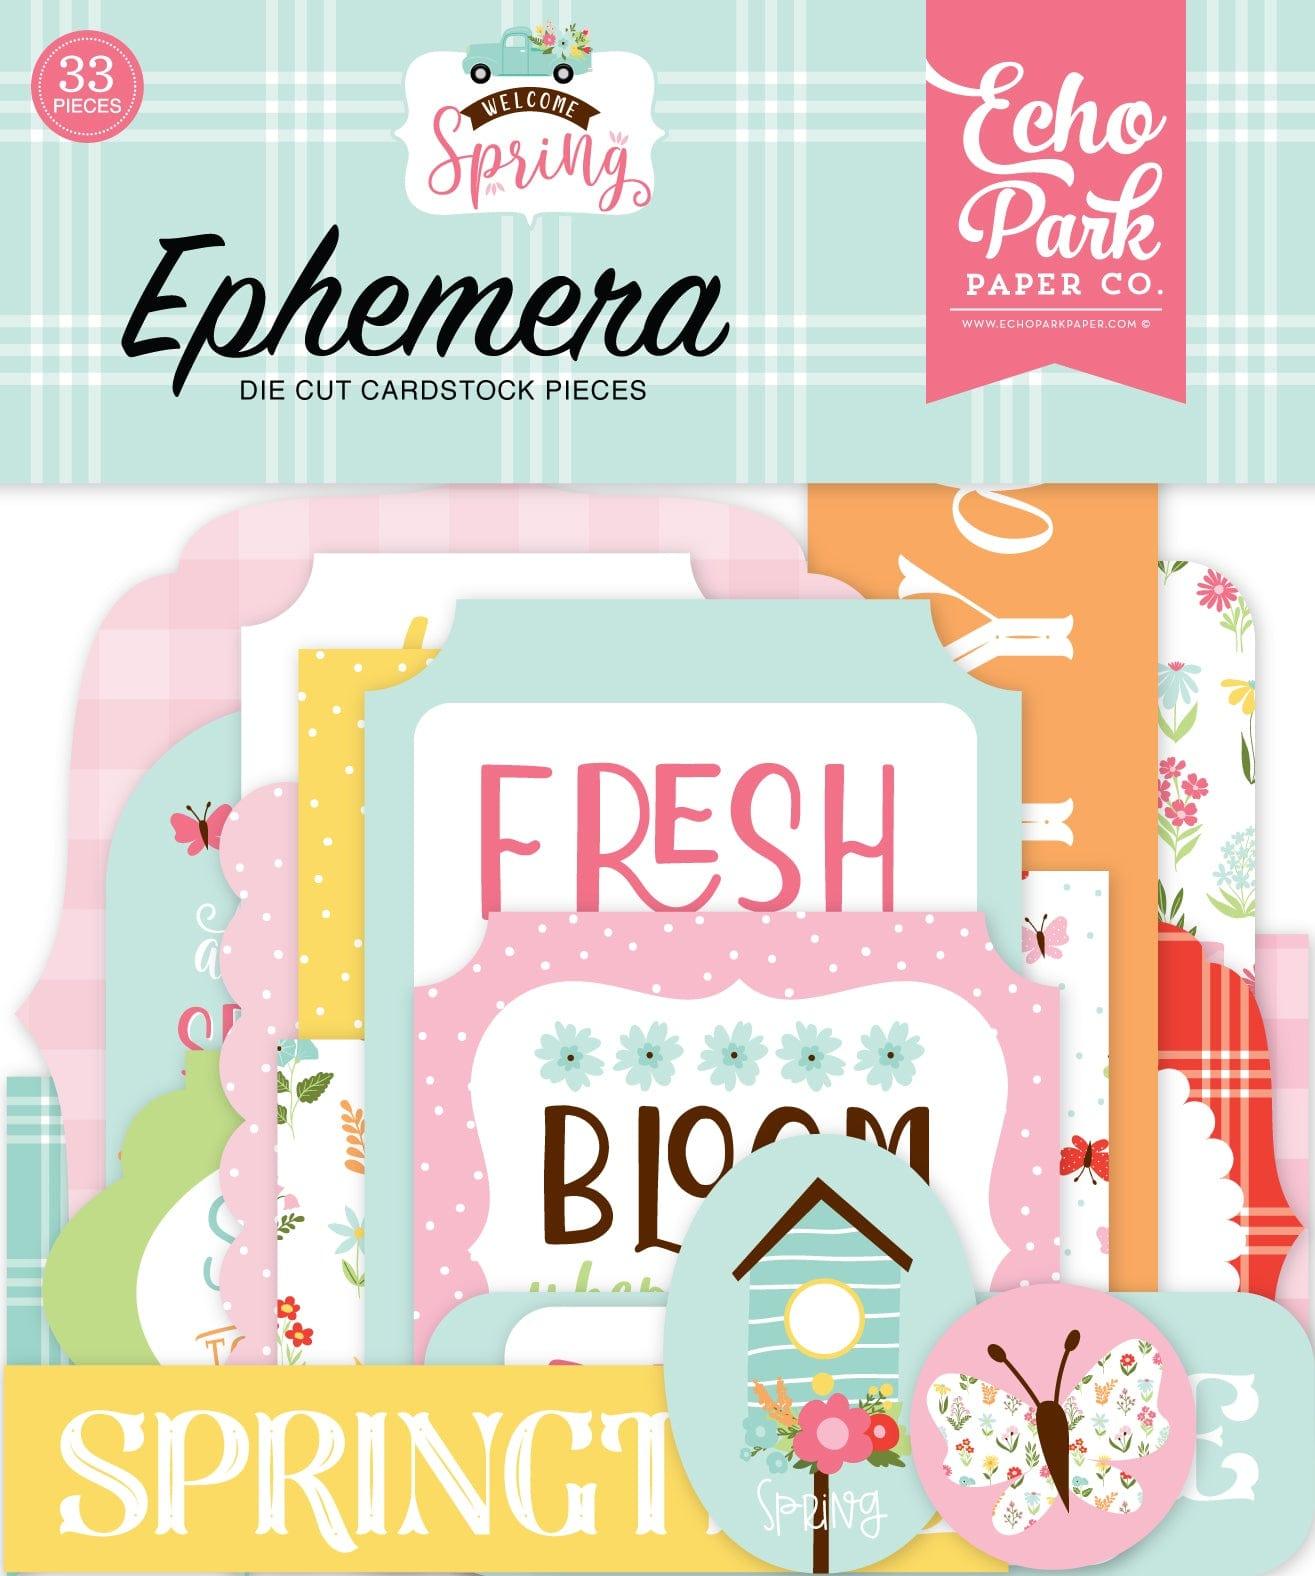 Welcome Spring Collection 5 x 5 Ephemera Die Cut Scrapbook Embellishments by Echo Park Paper - Scrapbook Supply Companies